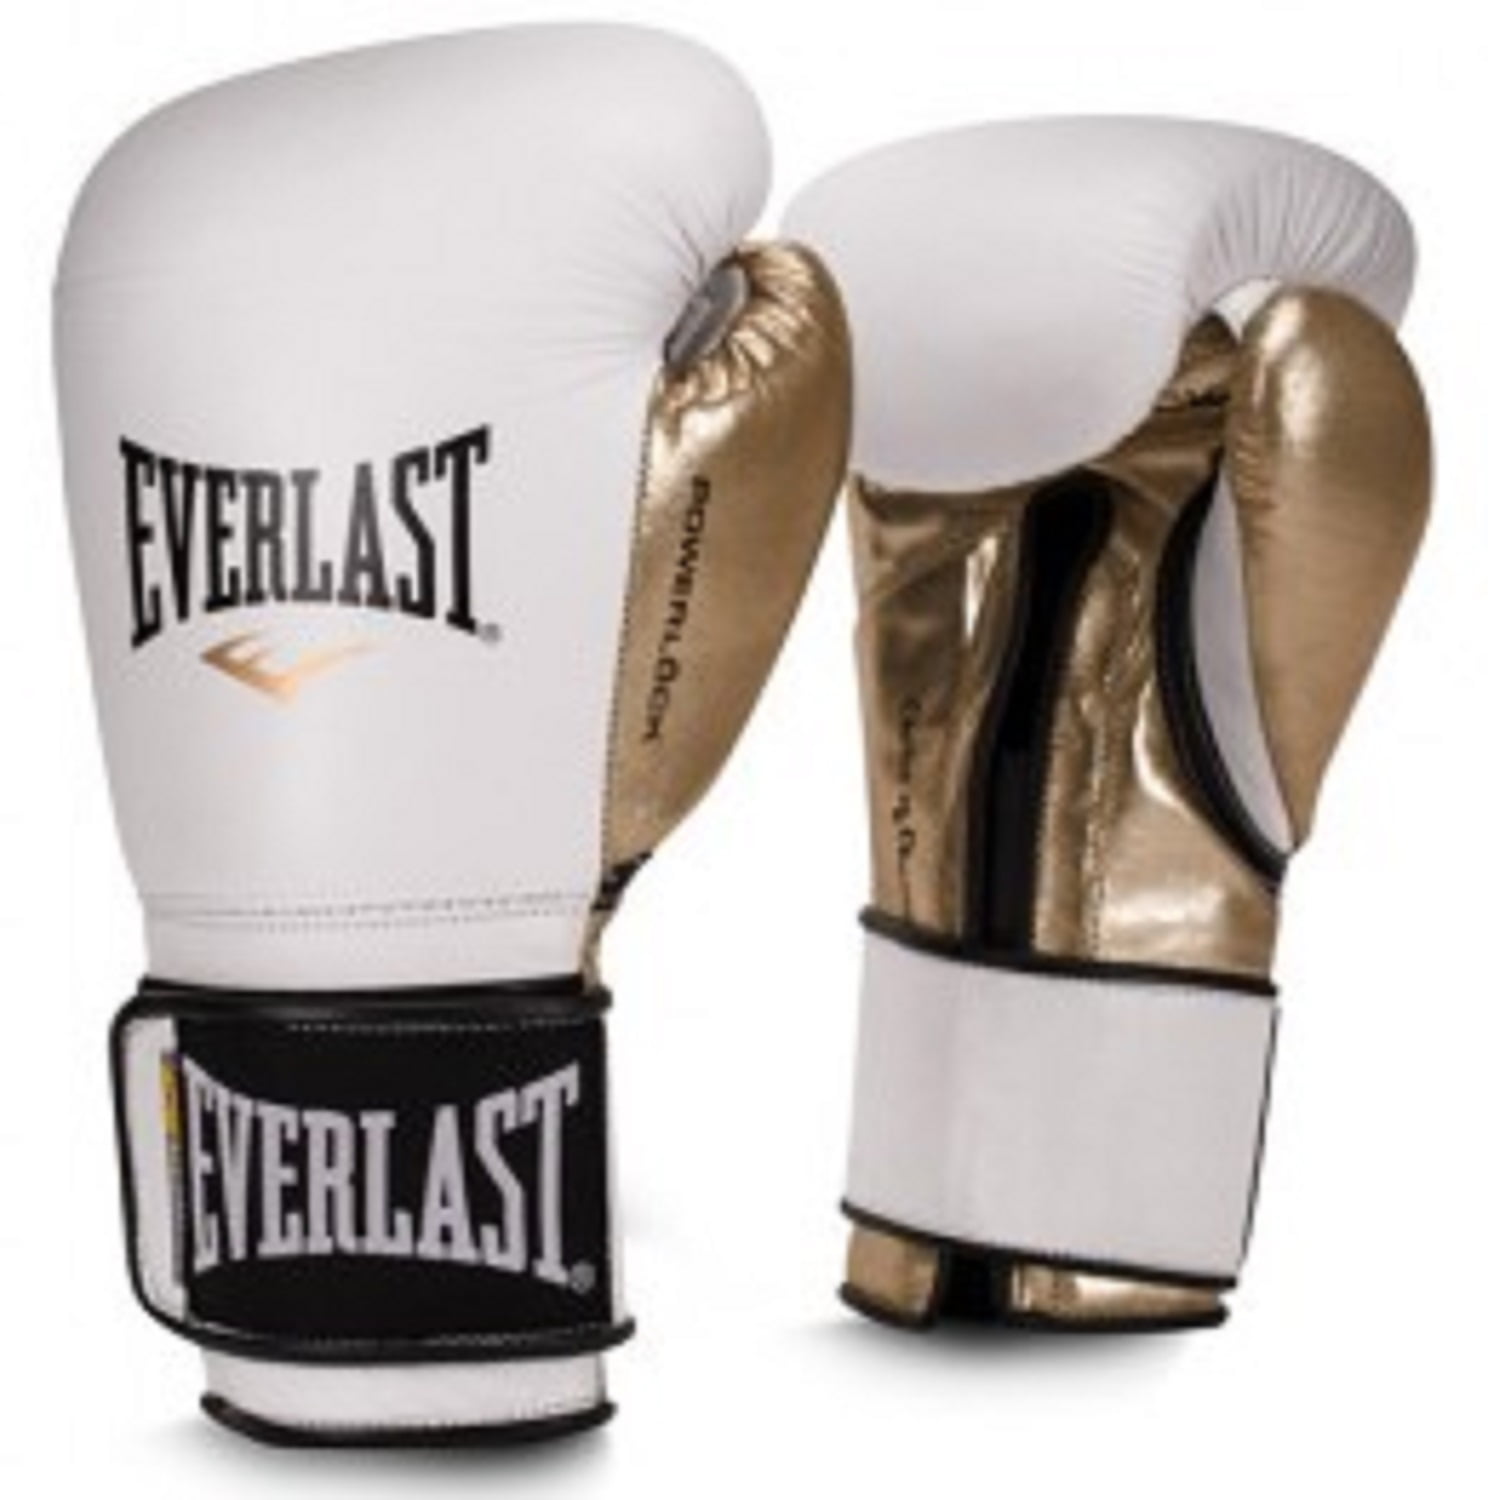 12 oz boxing gloves Boxing gloves 14 oz